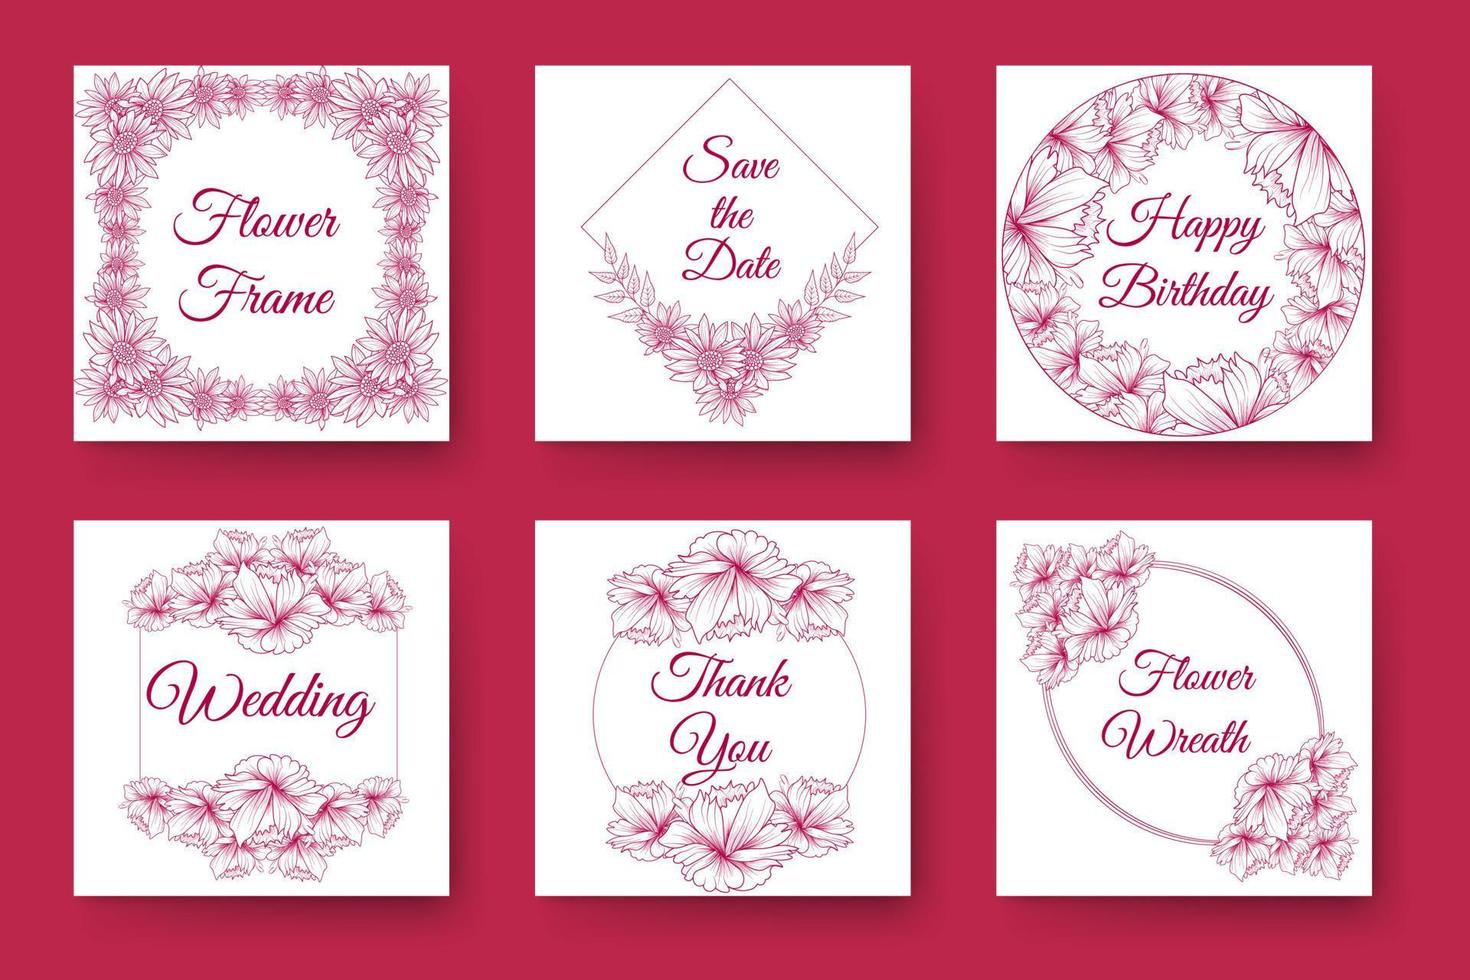 flower wreath design and floral frame design with elegant flowers border of wedding invitation card vector